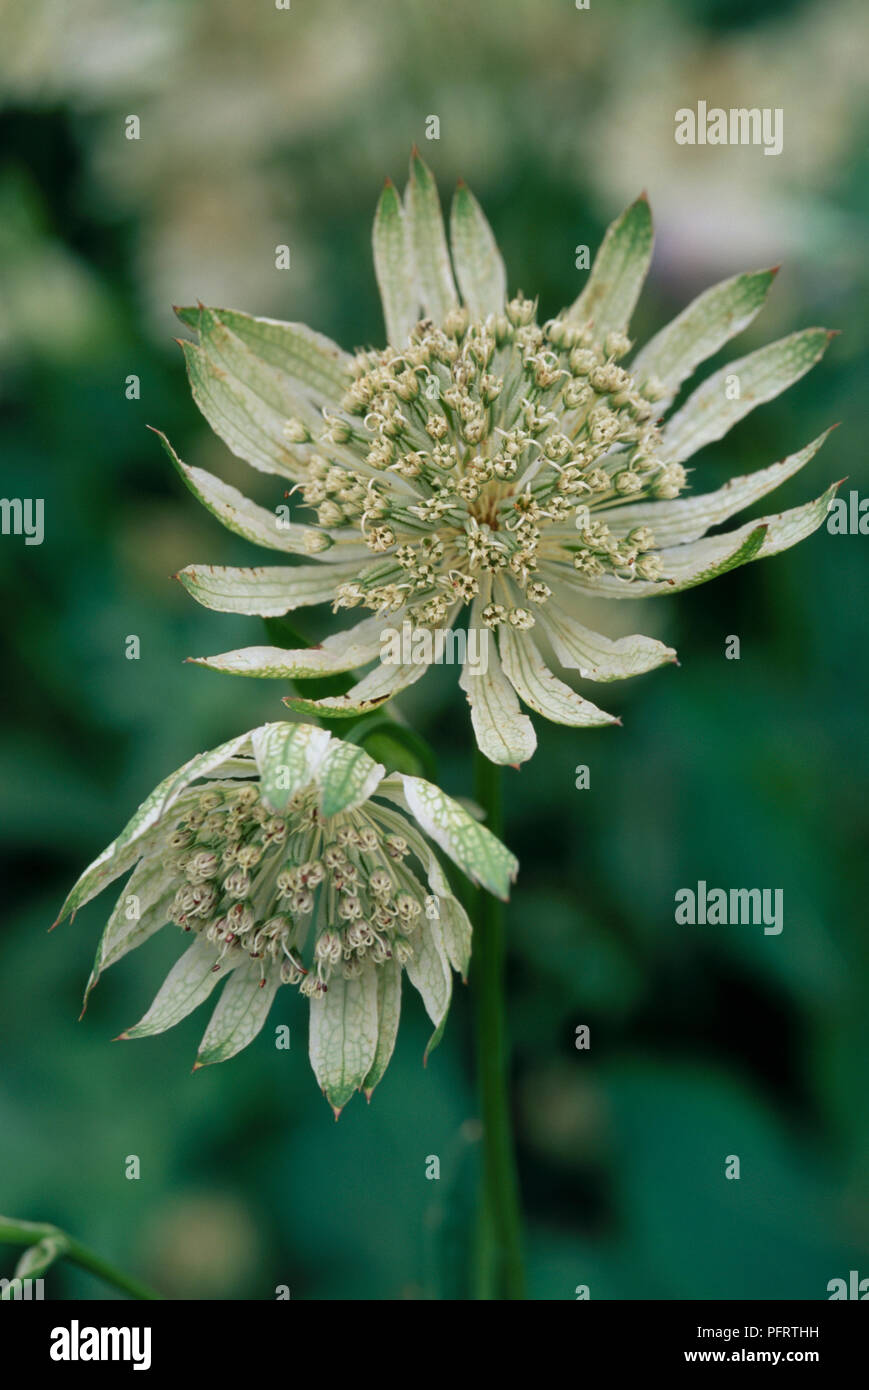 Astrantia major subsp. involucrata 'Shaggy' (Masterwort), flowers and bracts, close-up Stock Photo